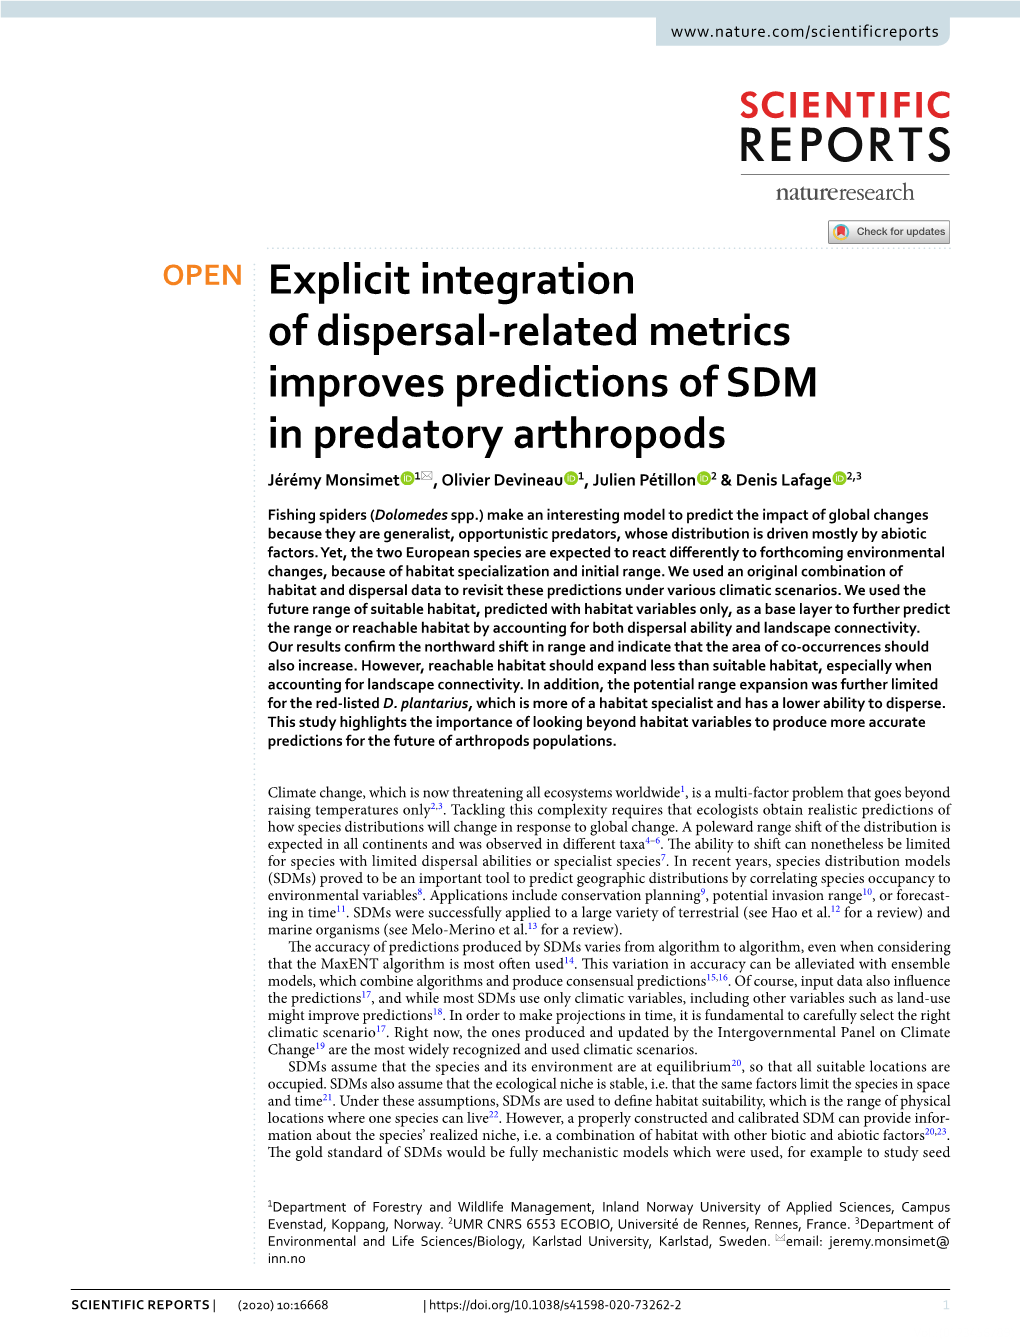 Explicit Integration of Dispersal-Related Metrics Improves Predictions of SDM in Predatory Arthropods